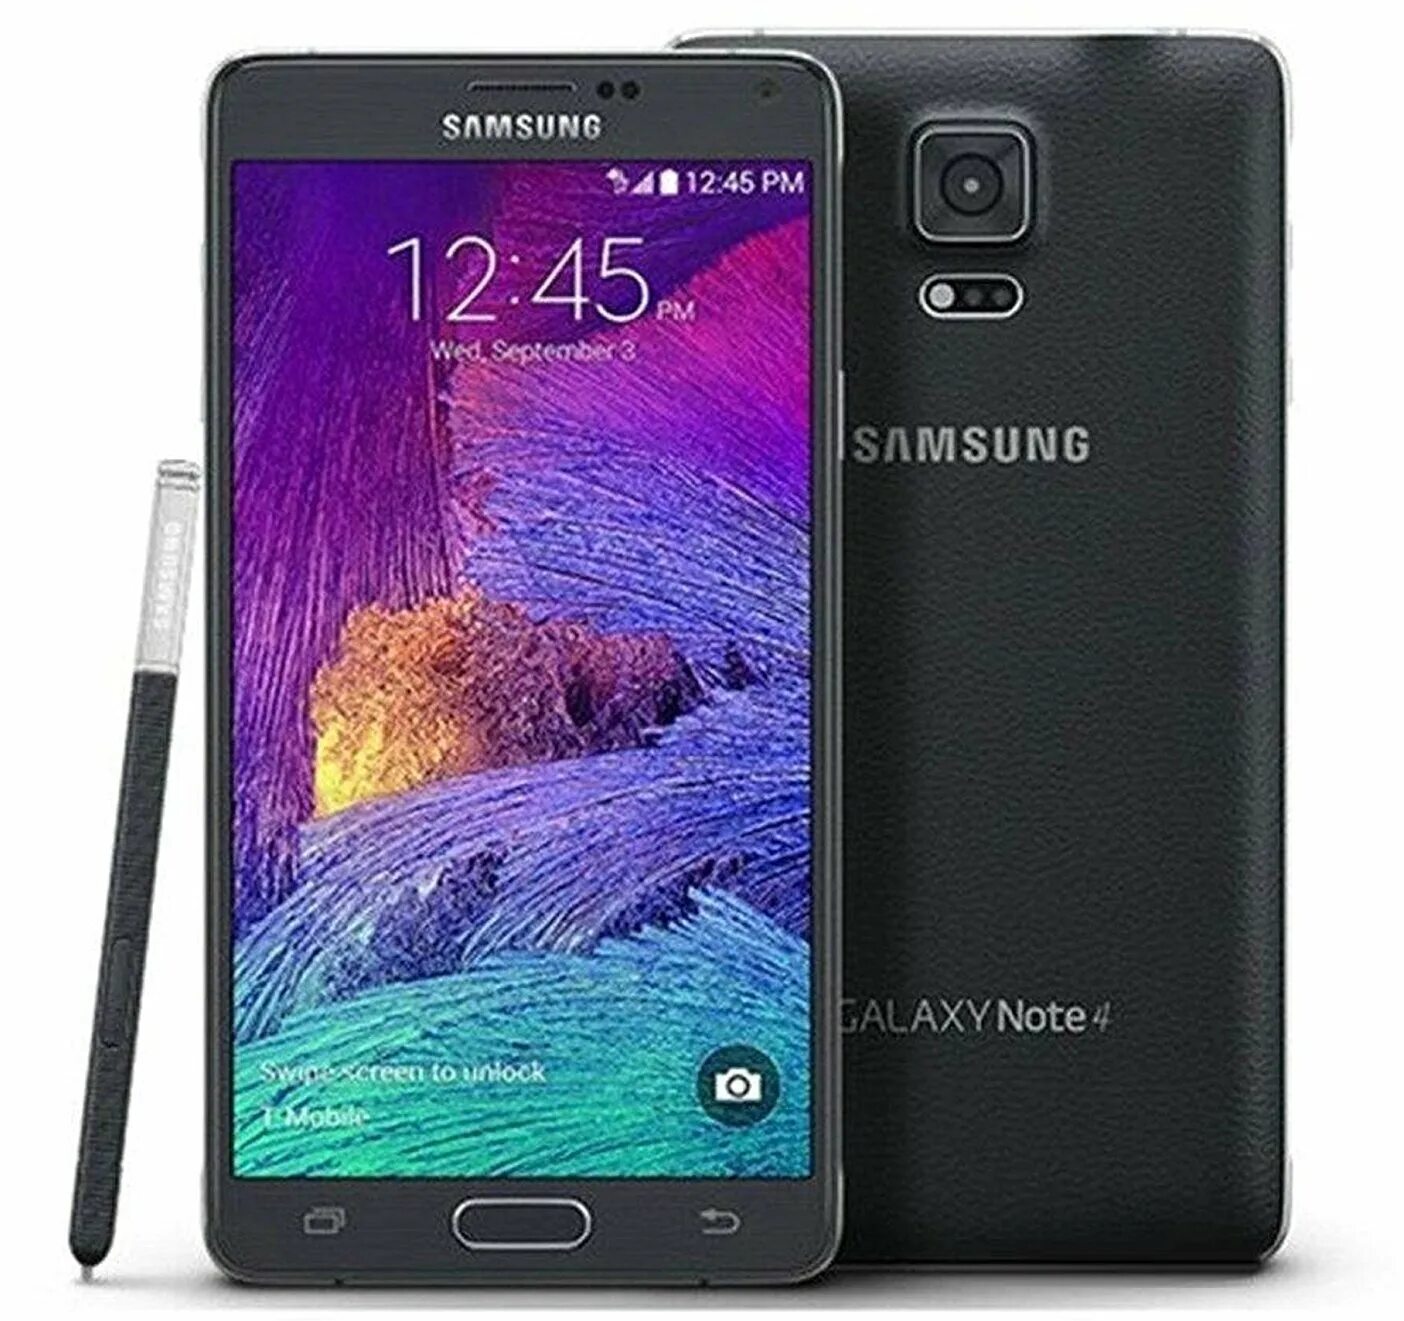 Экран note 4. Samsung SM-n910c. Galaxy Note 4. Samsung Galaxy s4 Note. Самсунг ноут 4.